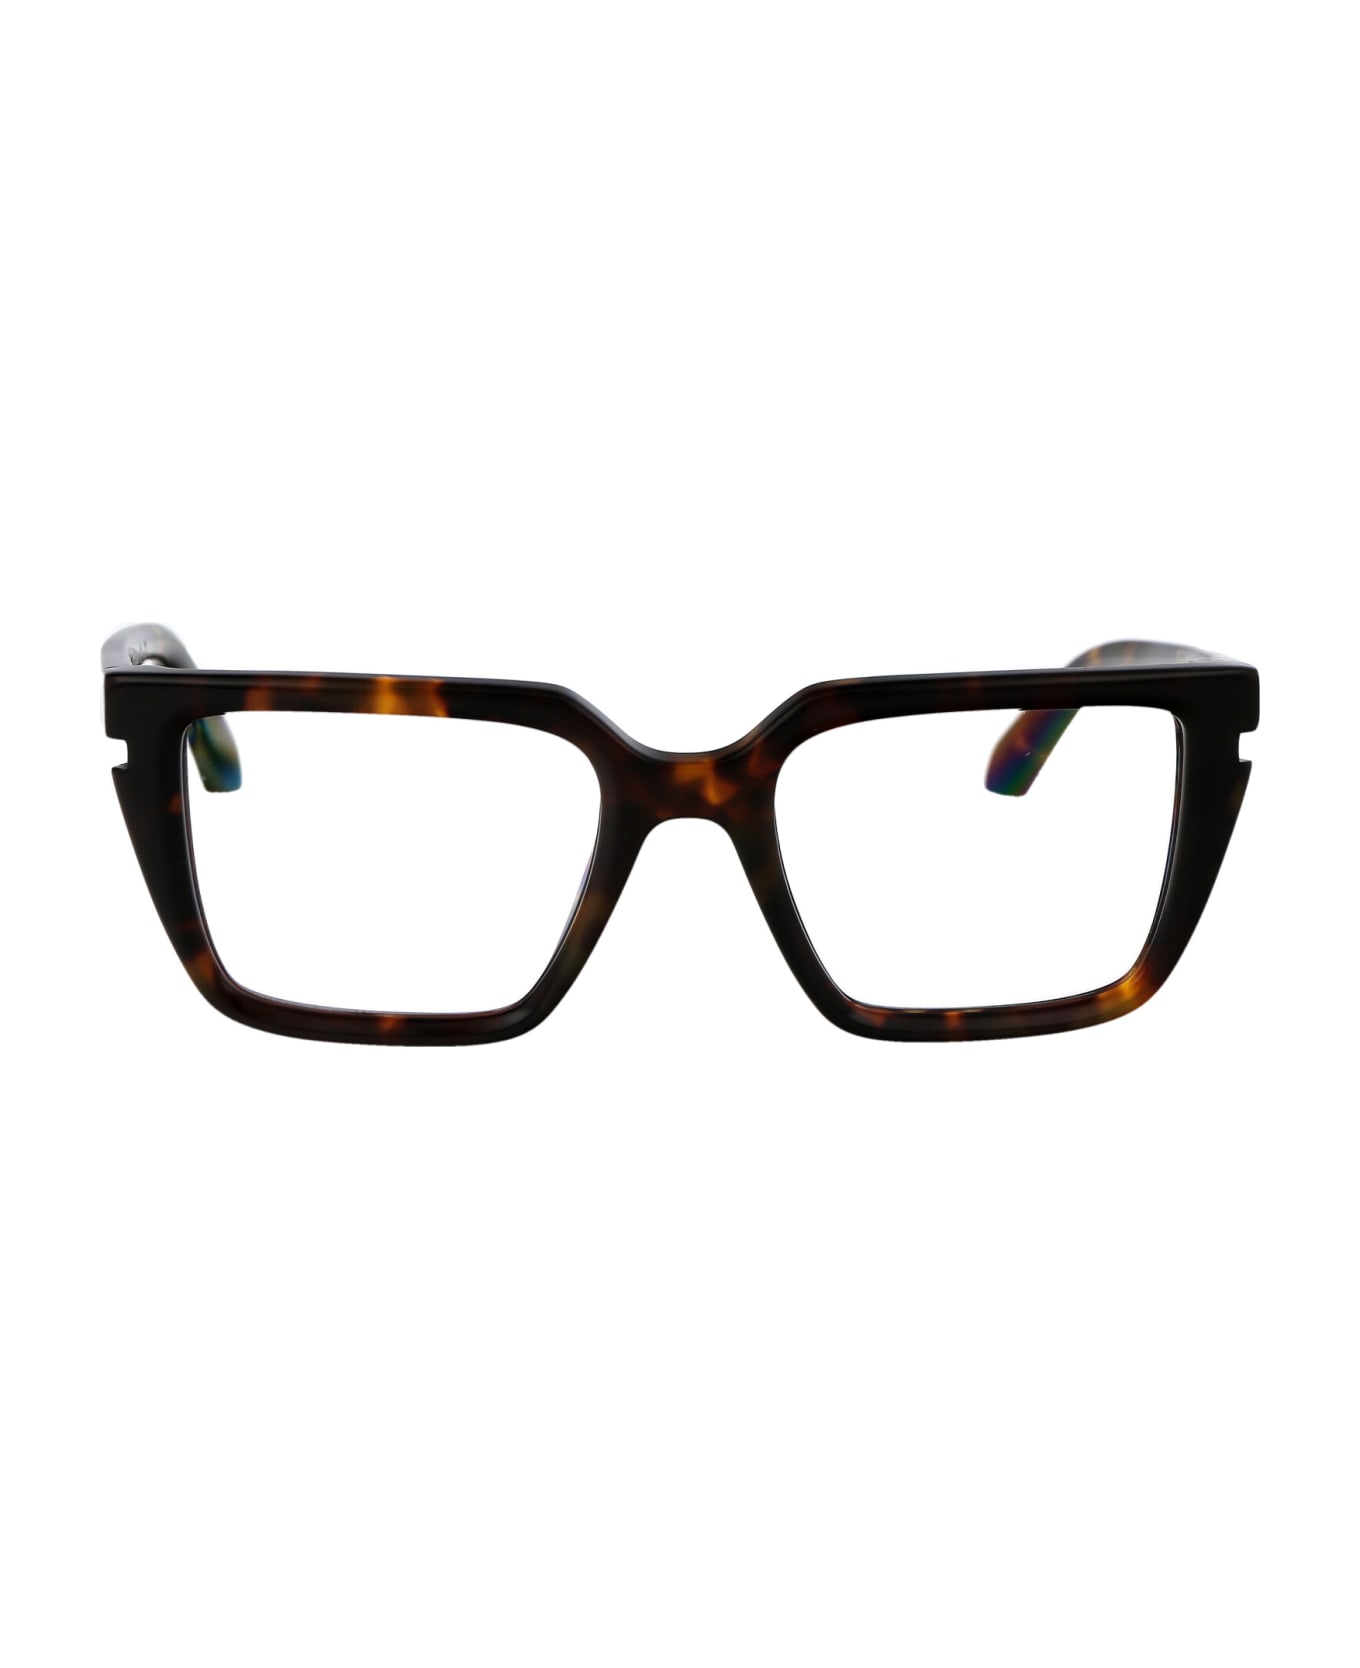 Off-White Optical Style 52 Glasses - 6000 HAVANA